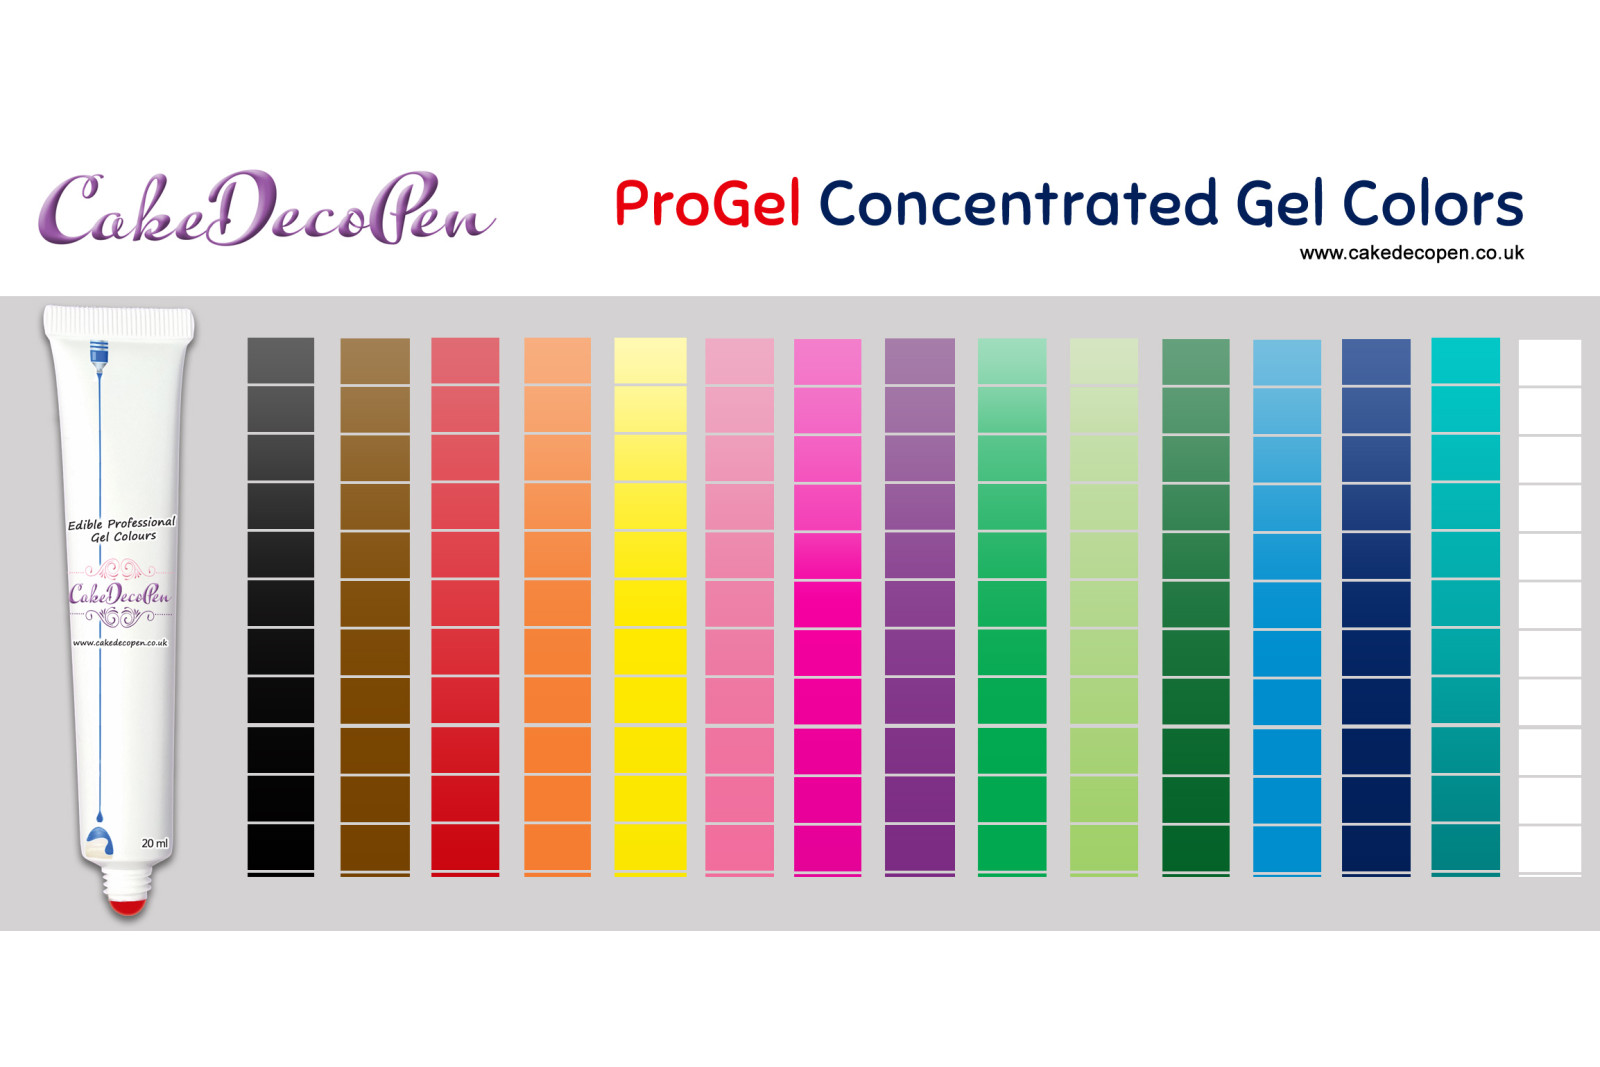 Leaf Green | Gel Food Colors | Concentrated ProGel | Cake Decorating | 30 ML